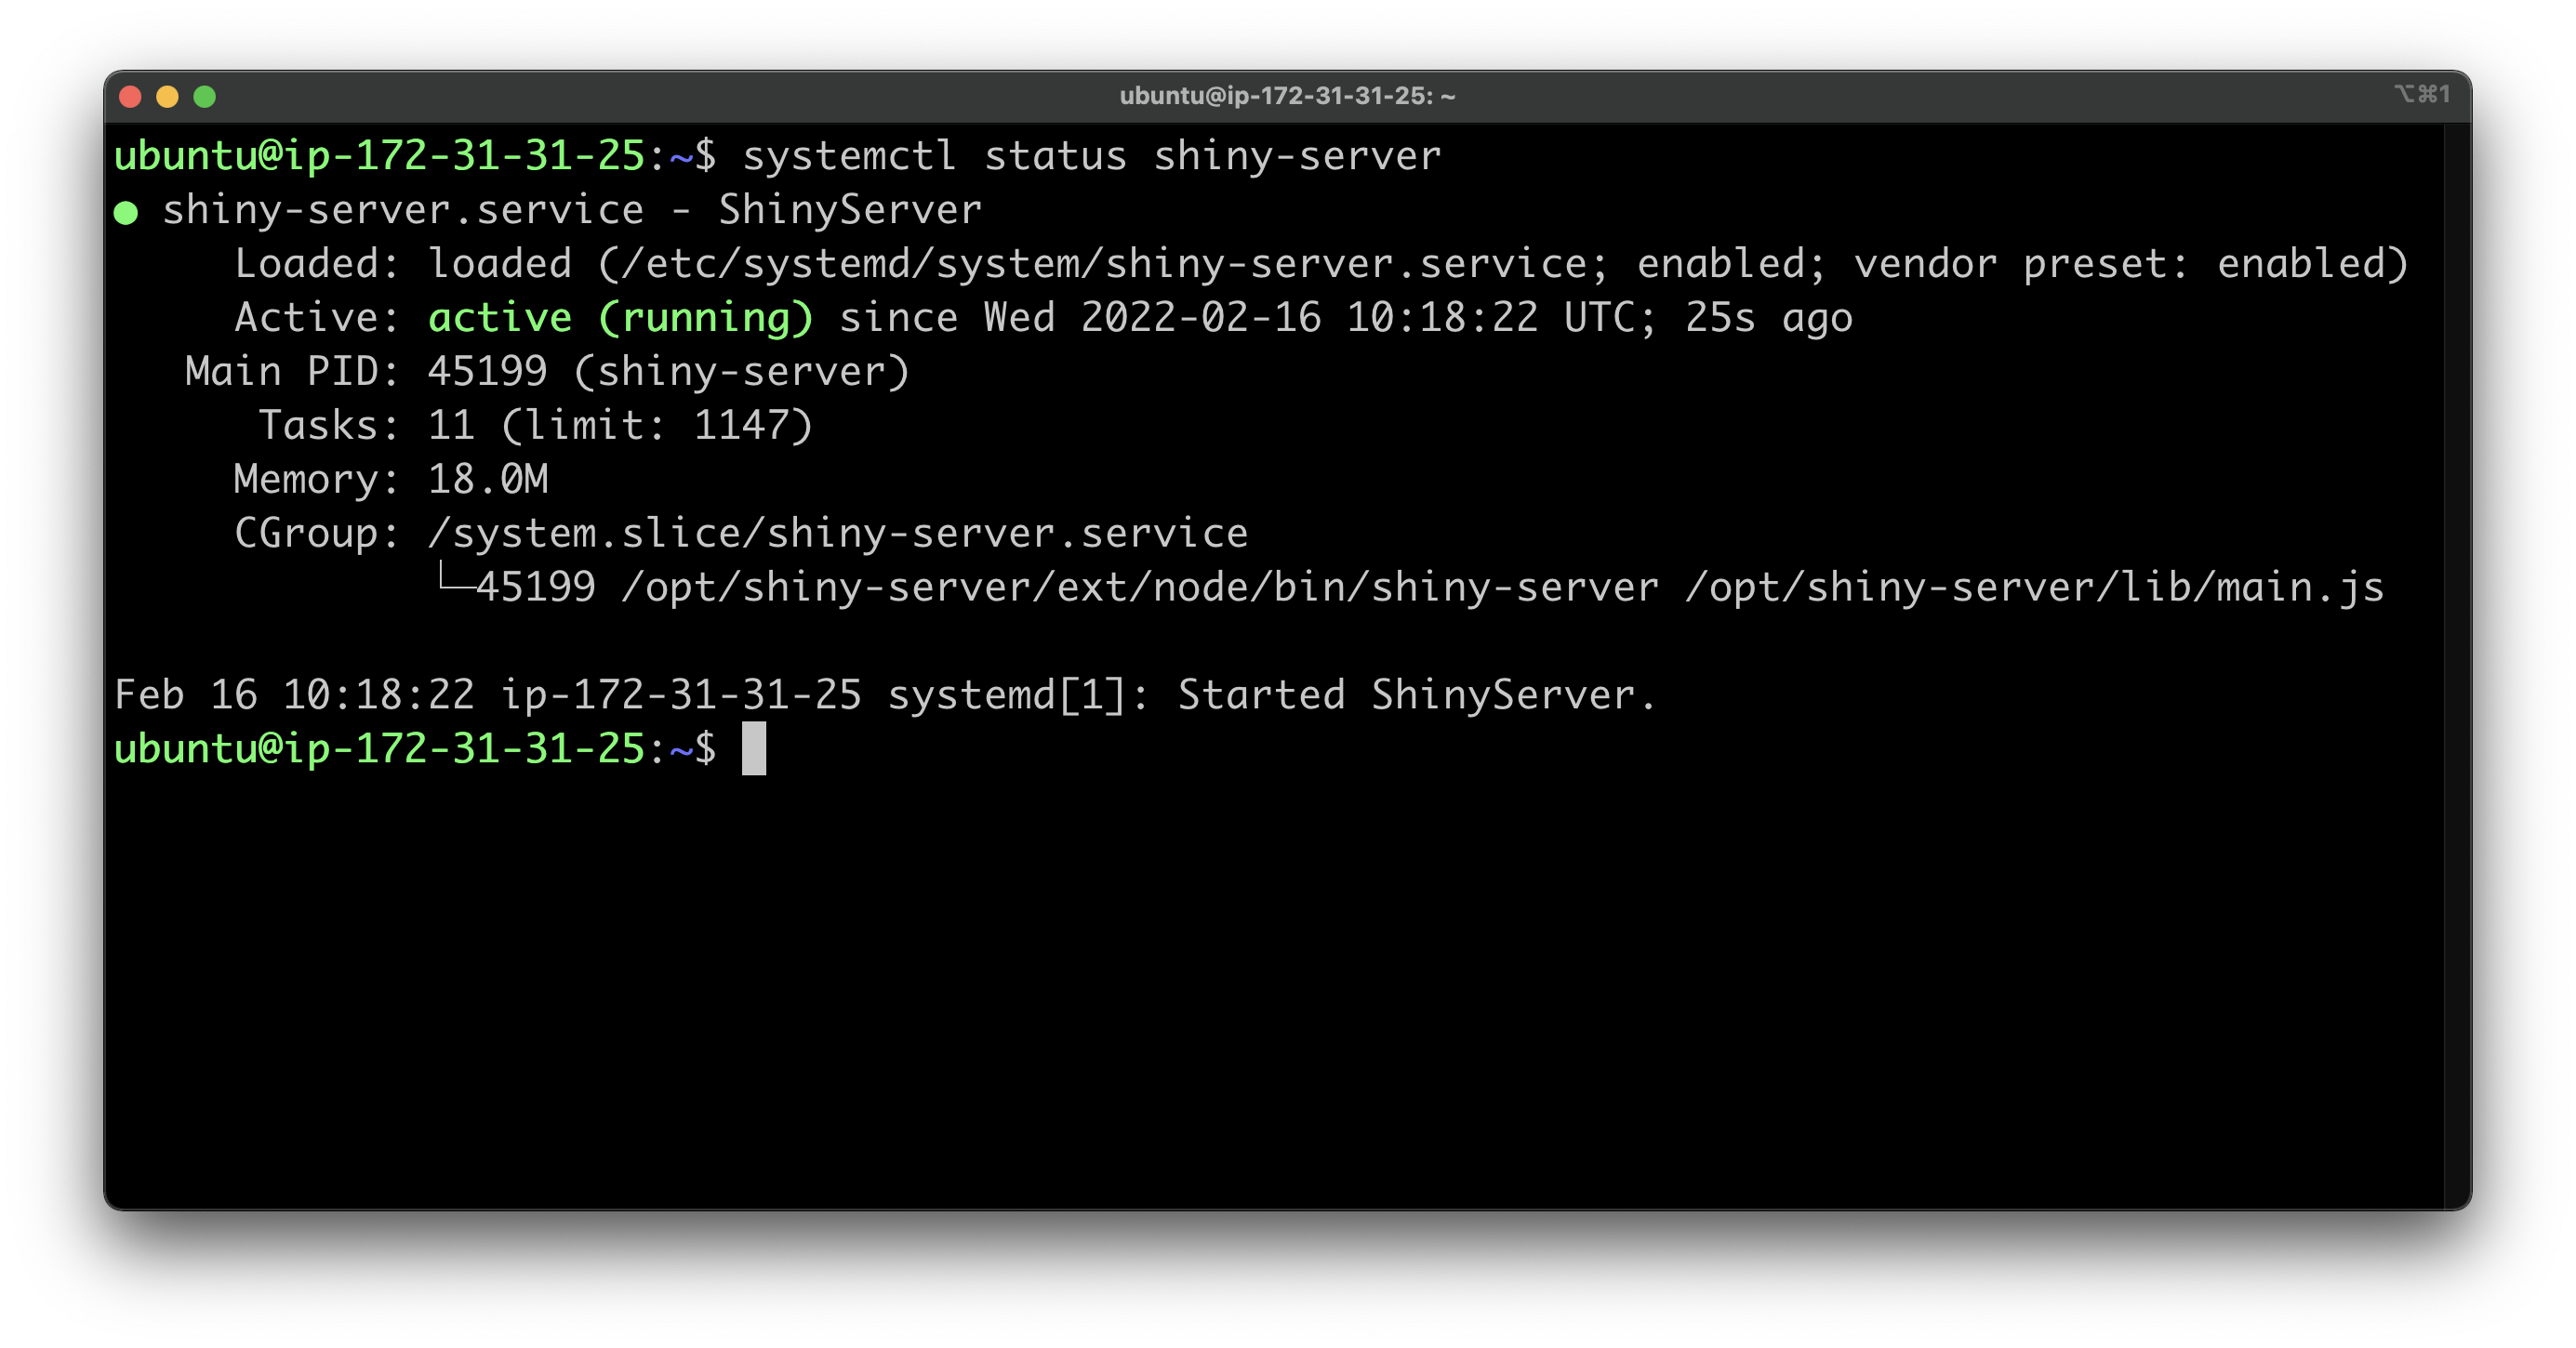 Image 7 - Shiny Server status on an EC2 instance